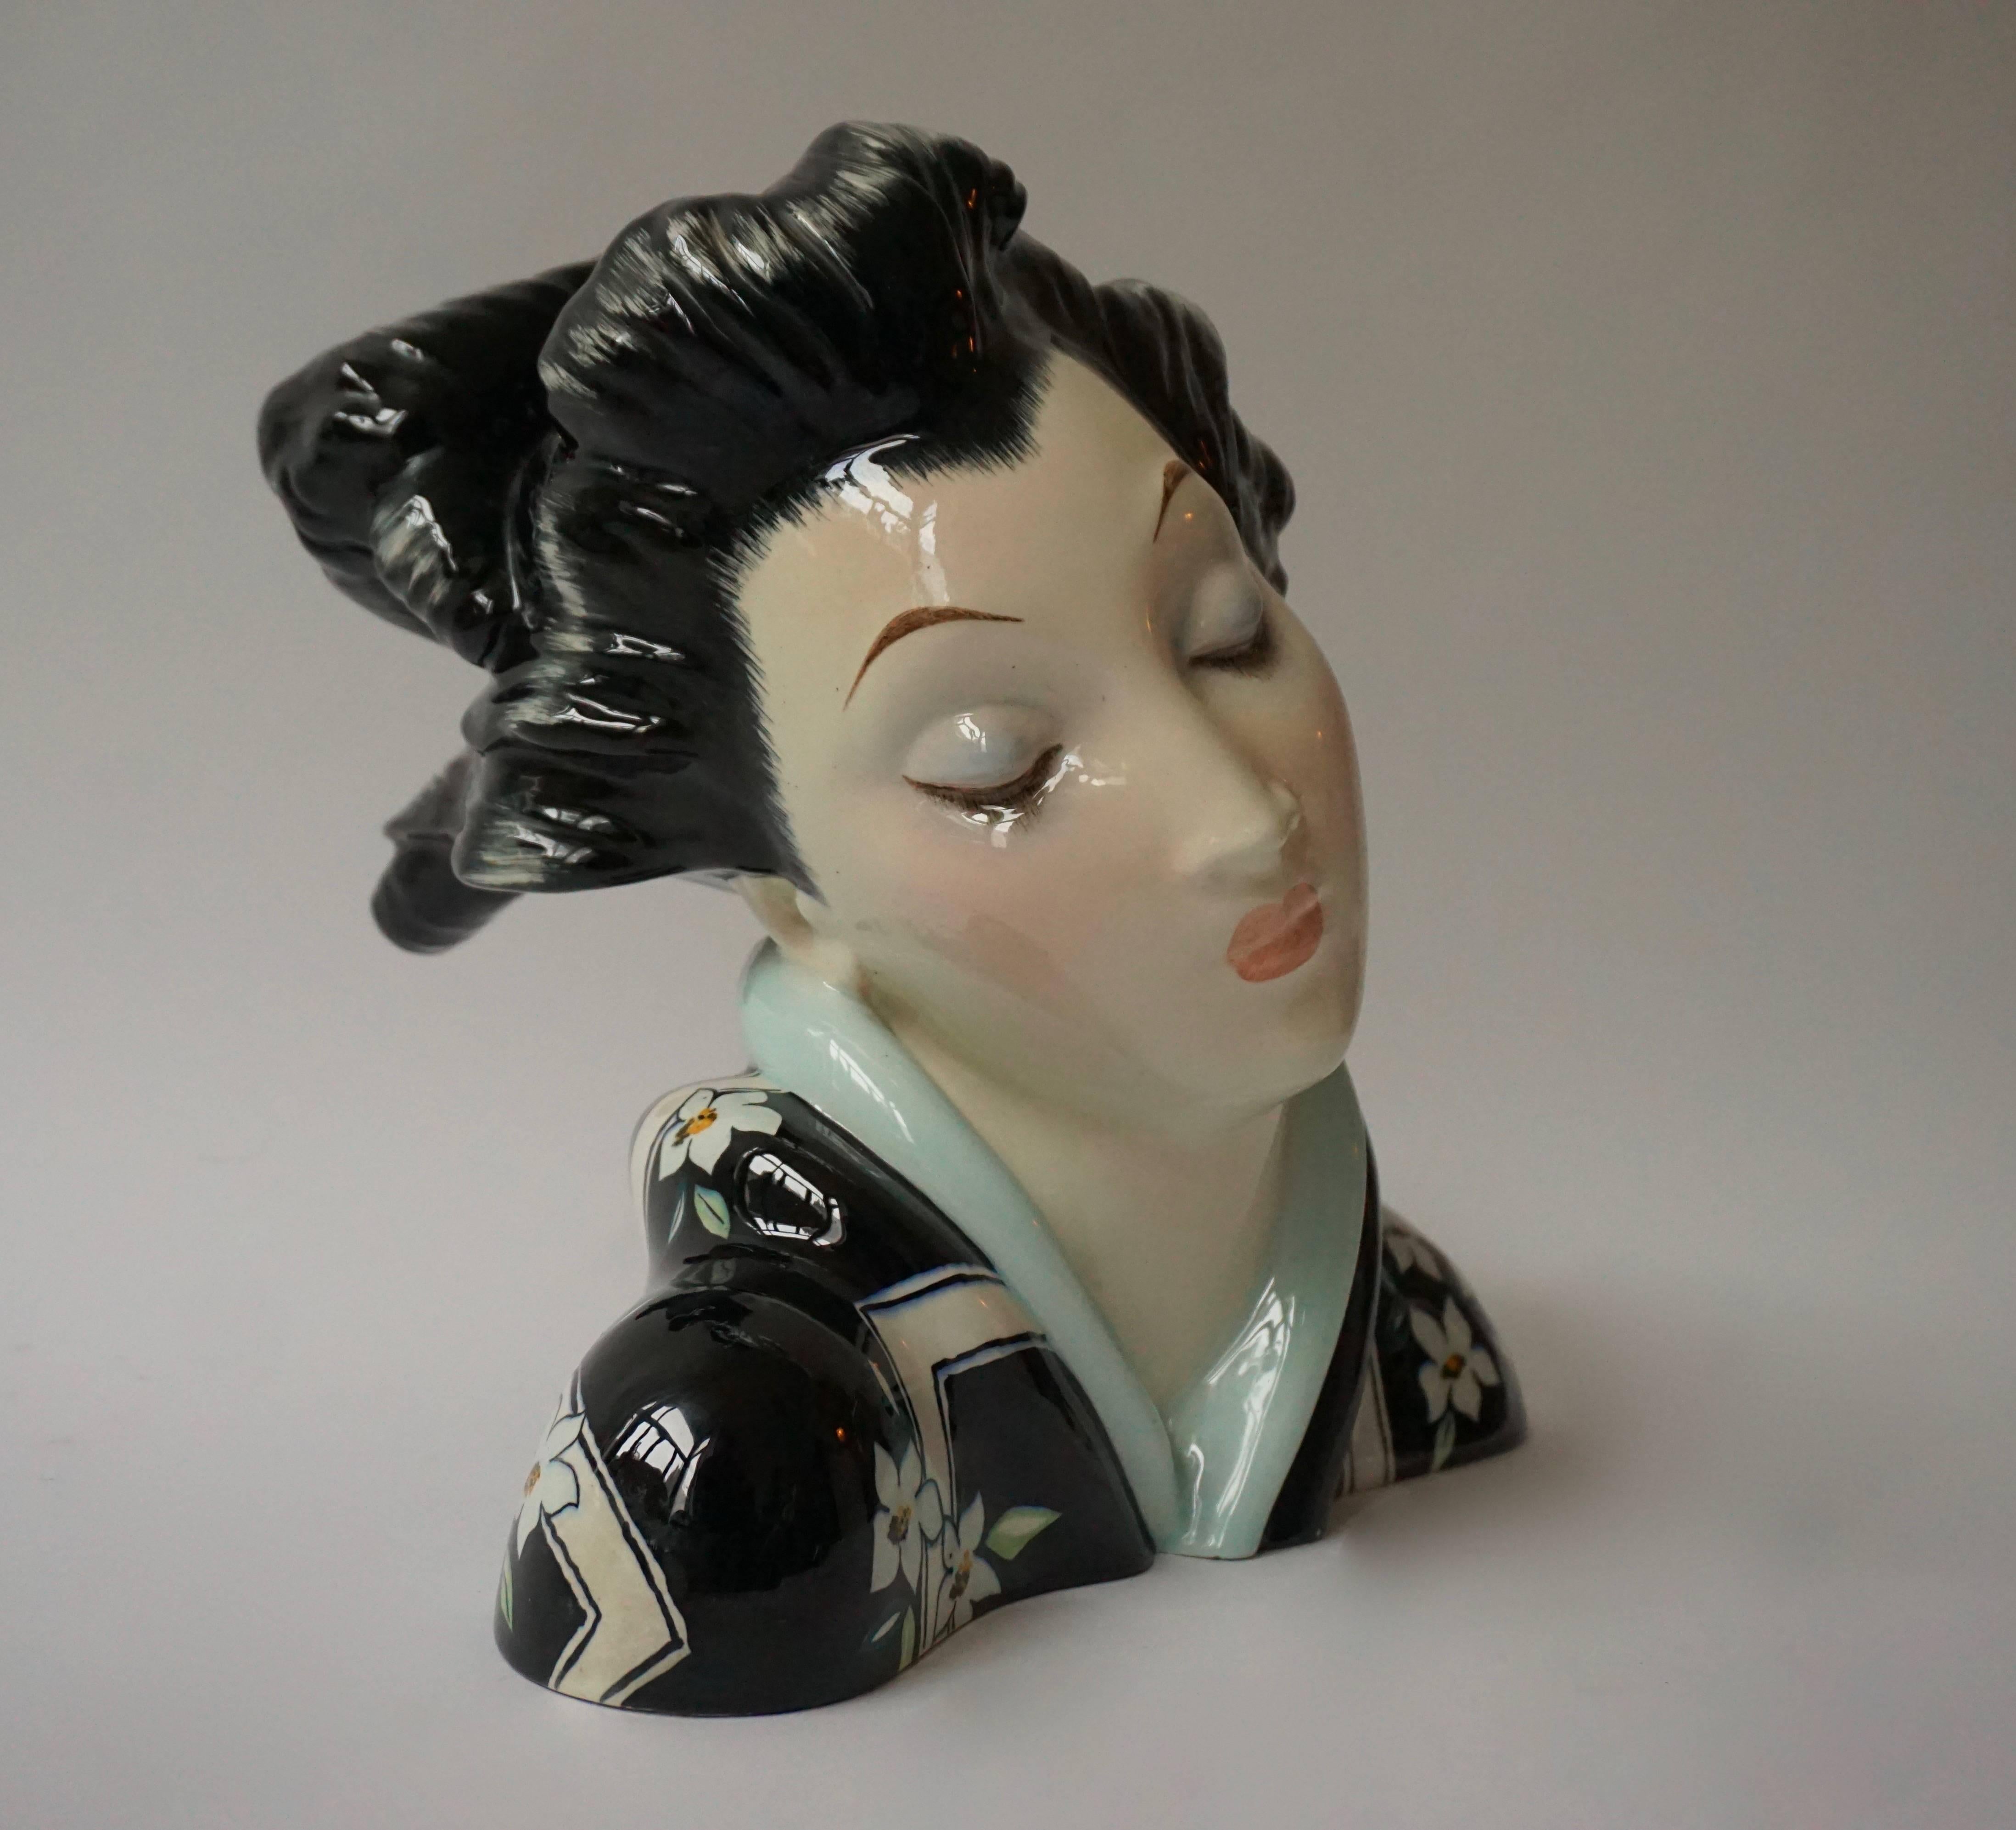 Japanese porcelain sculpture of a Geisha, signed Lavorazione.
Width:34 cm.
Height:30 cm.
Depth:28 cm.